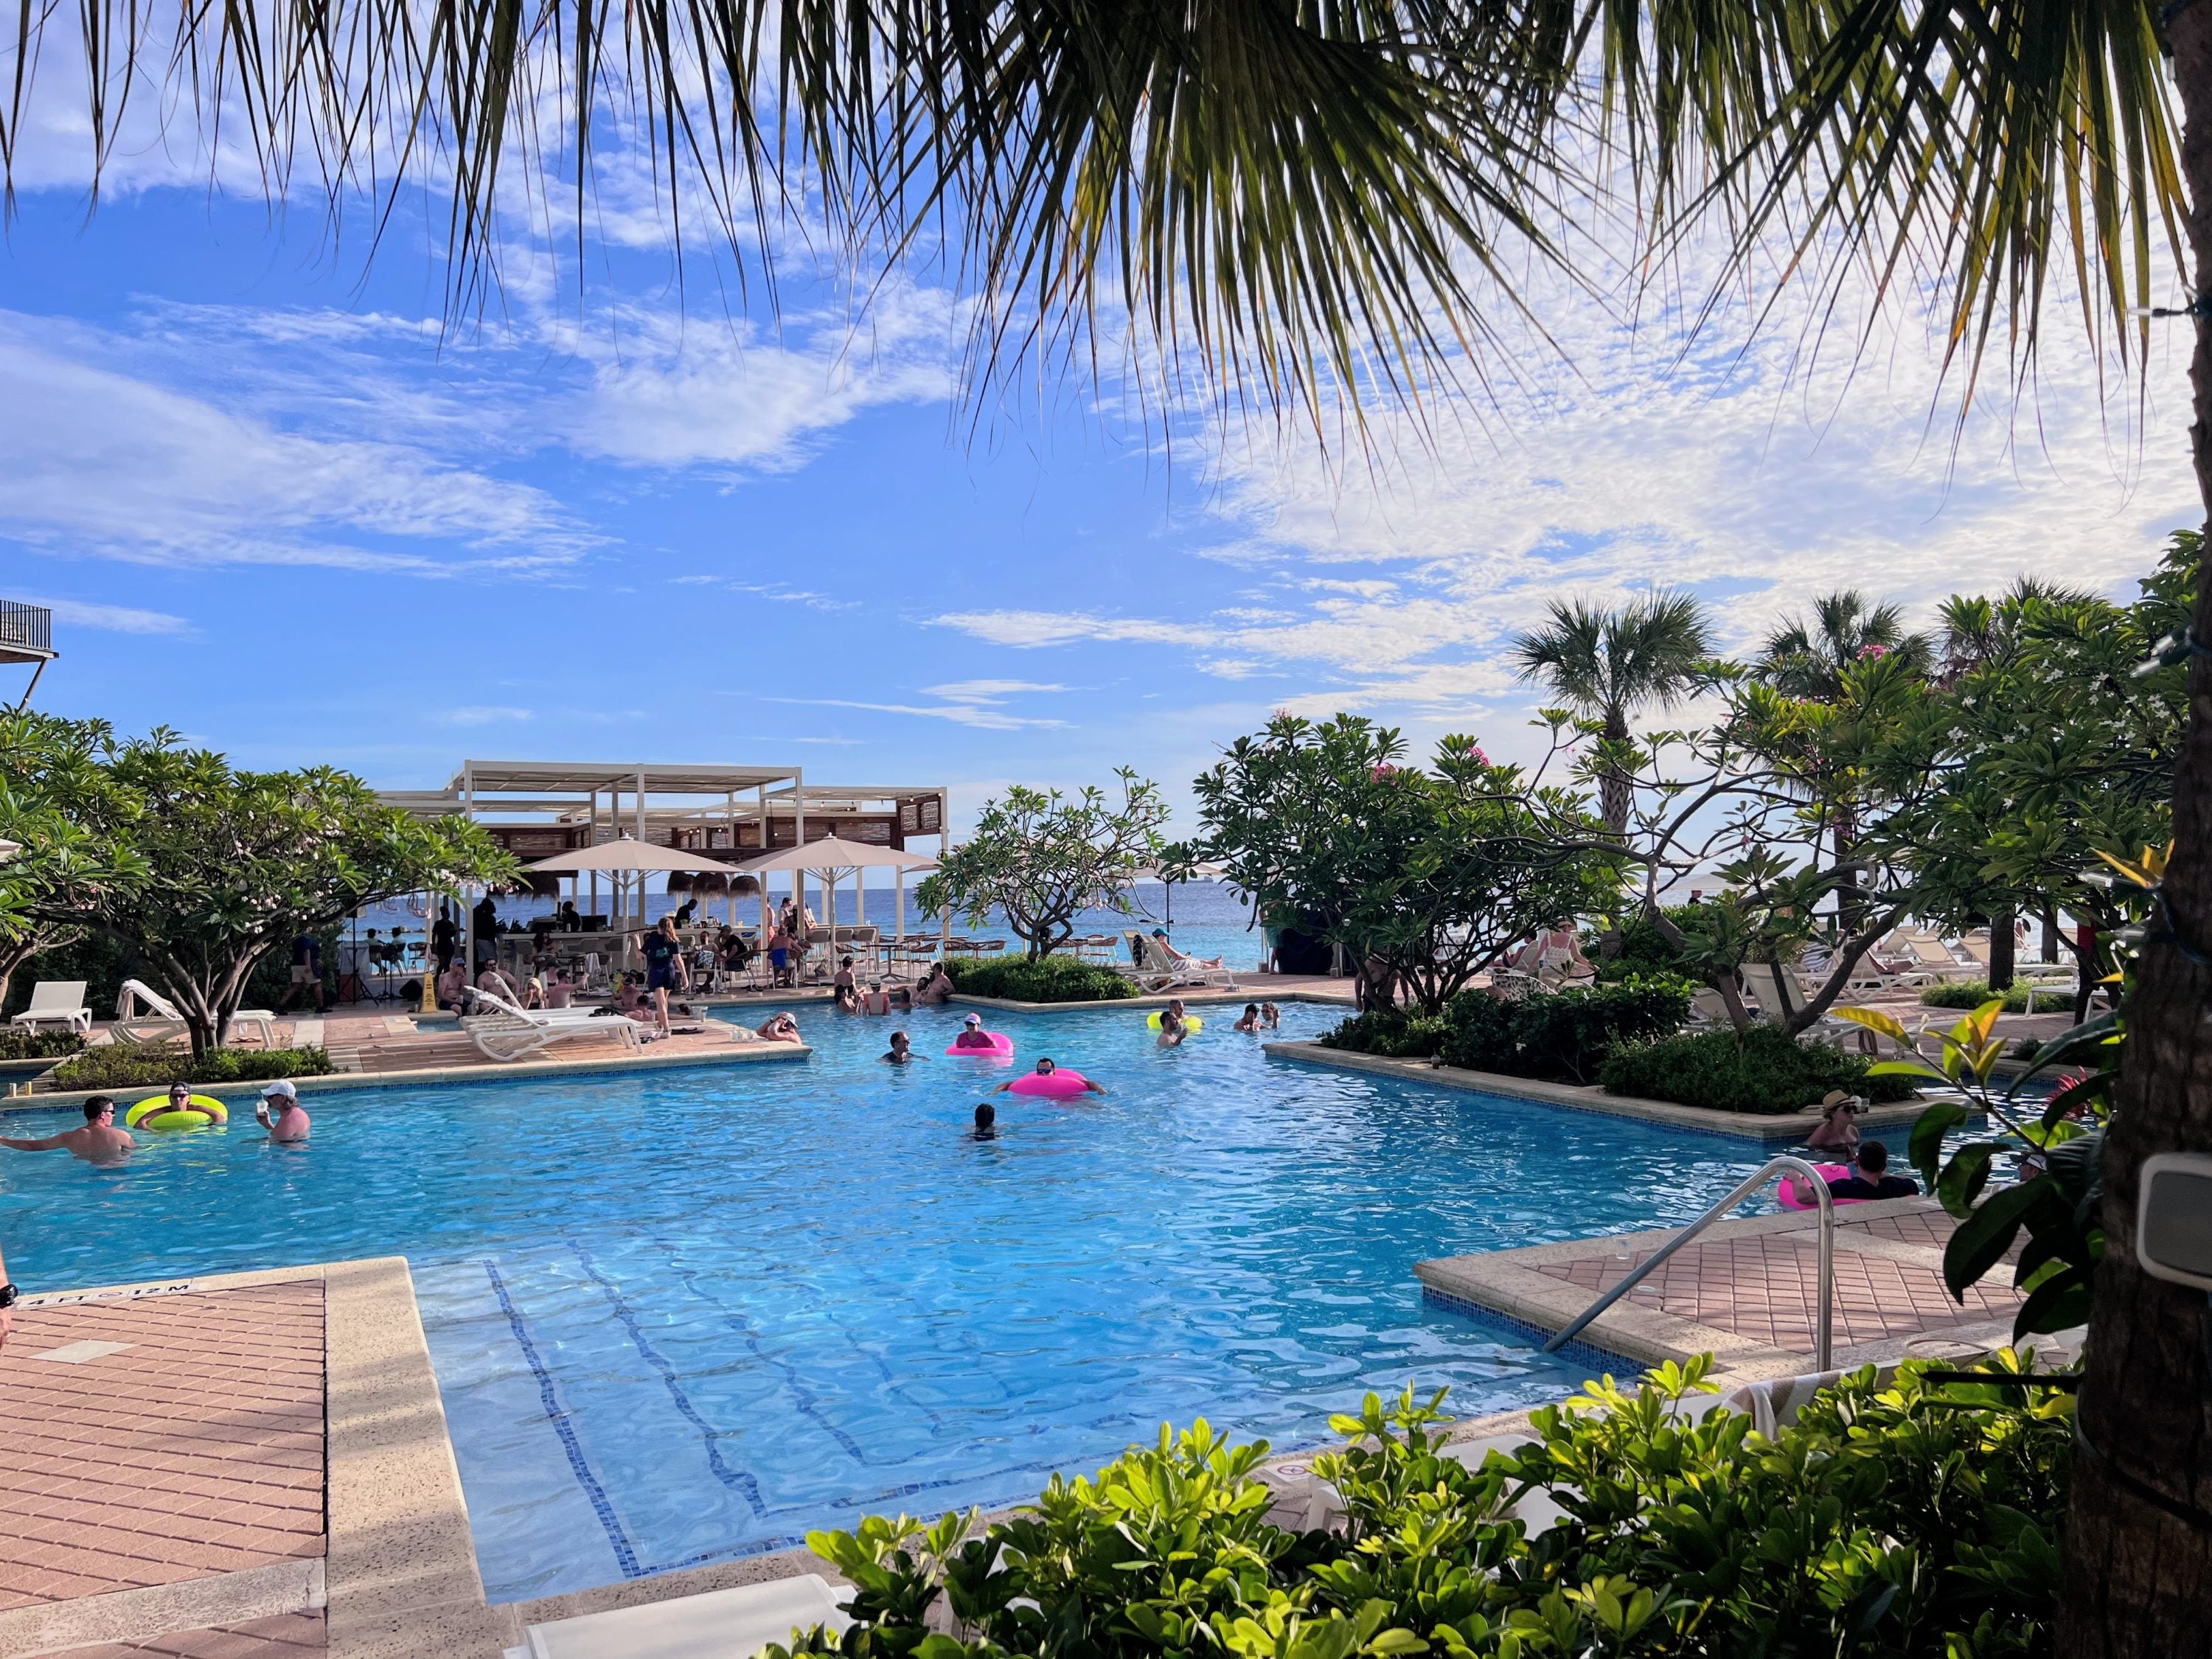 Main pool at Curacao Marriott beach resort